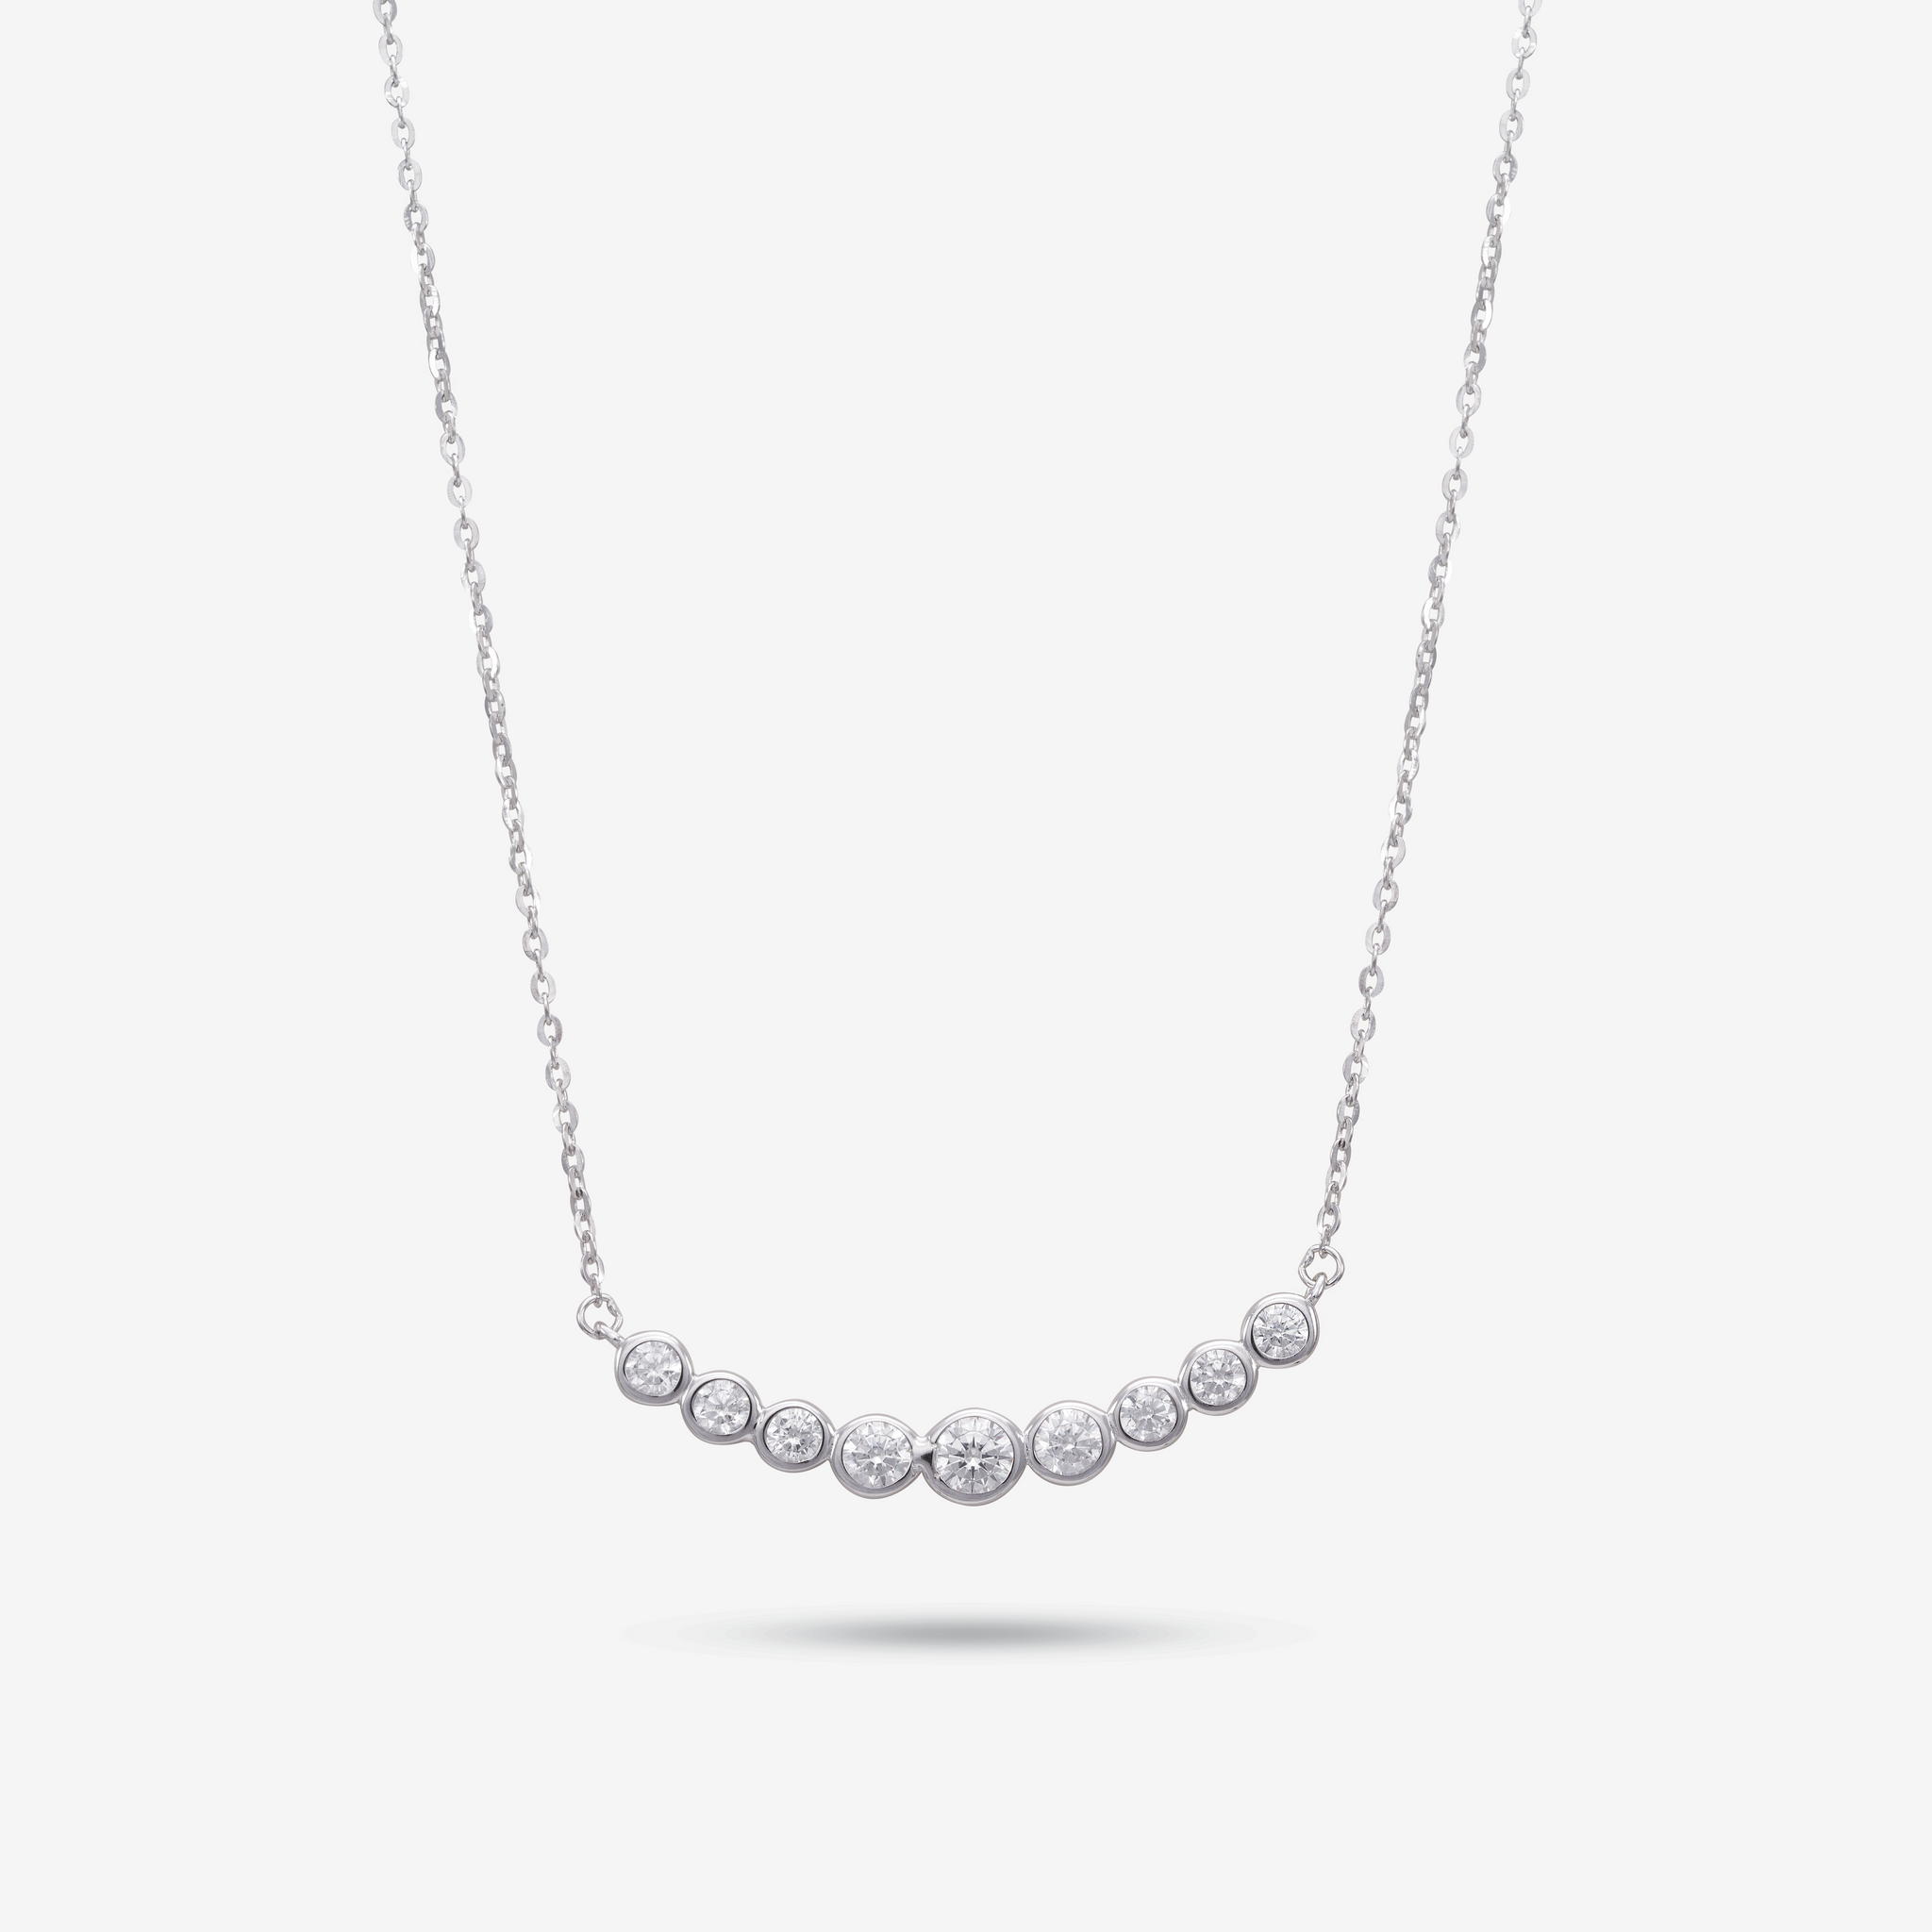 Lightweight Bezel Set Cubic Zirconia Diamond 925 Sterling Silver Pendant Chain